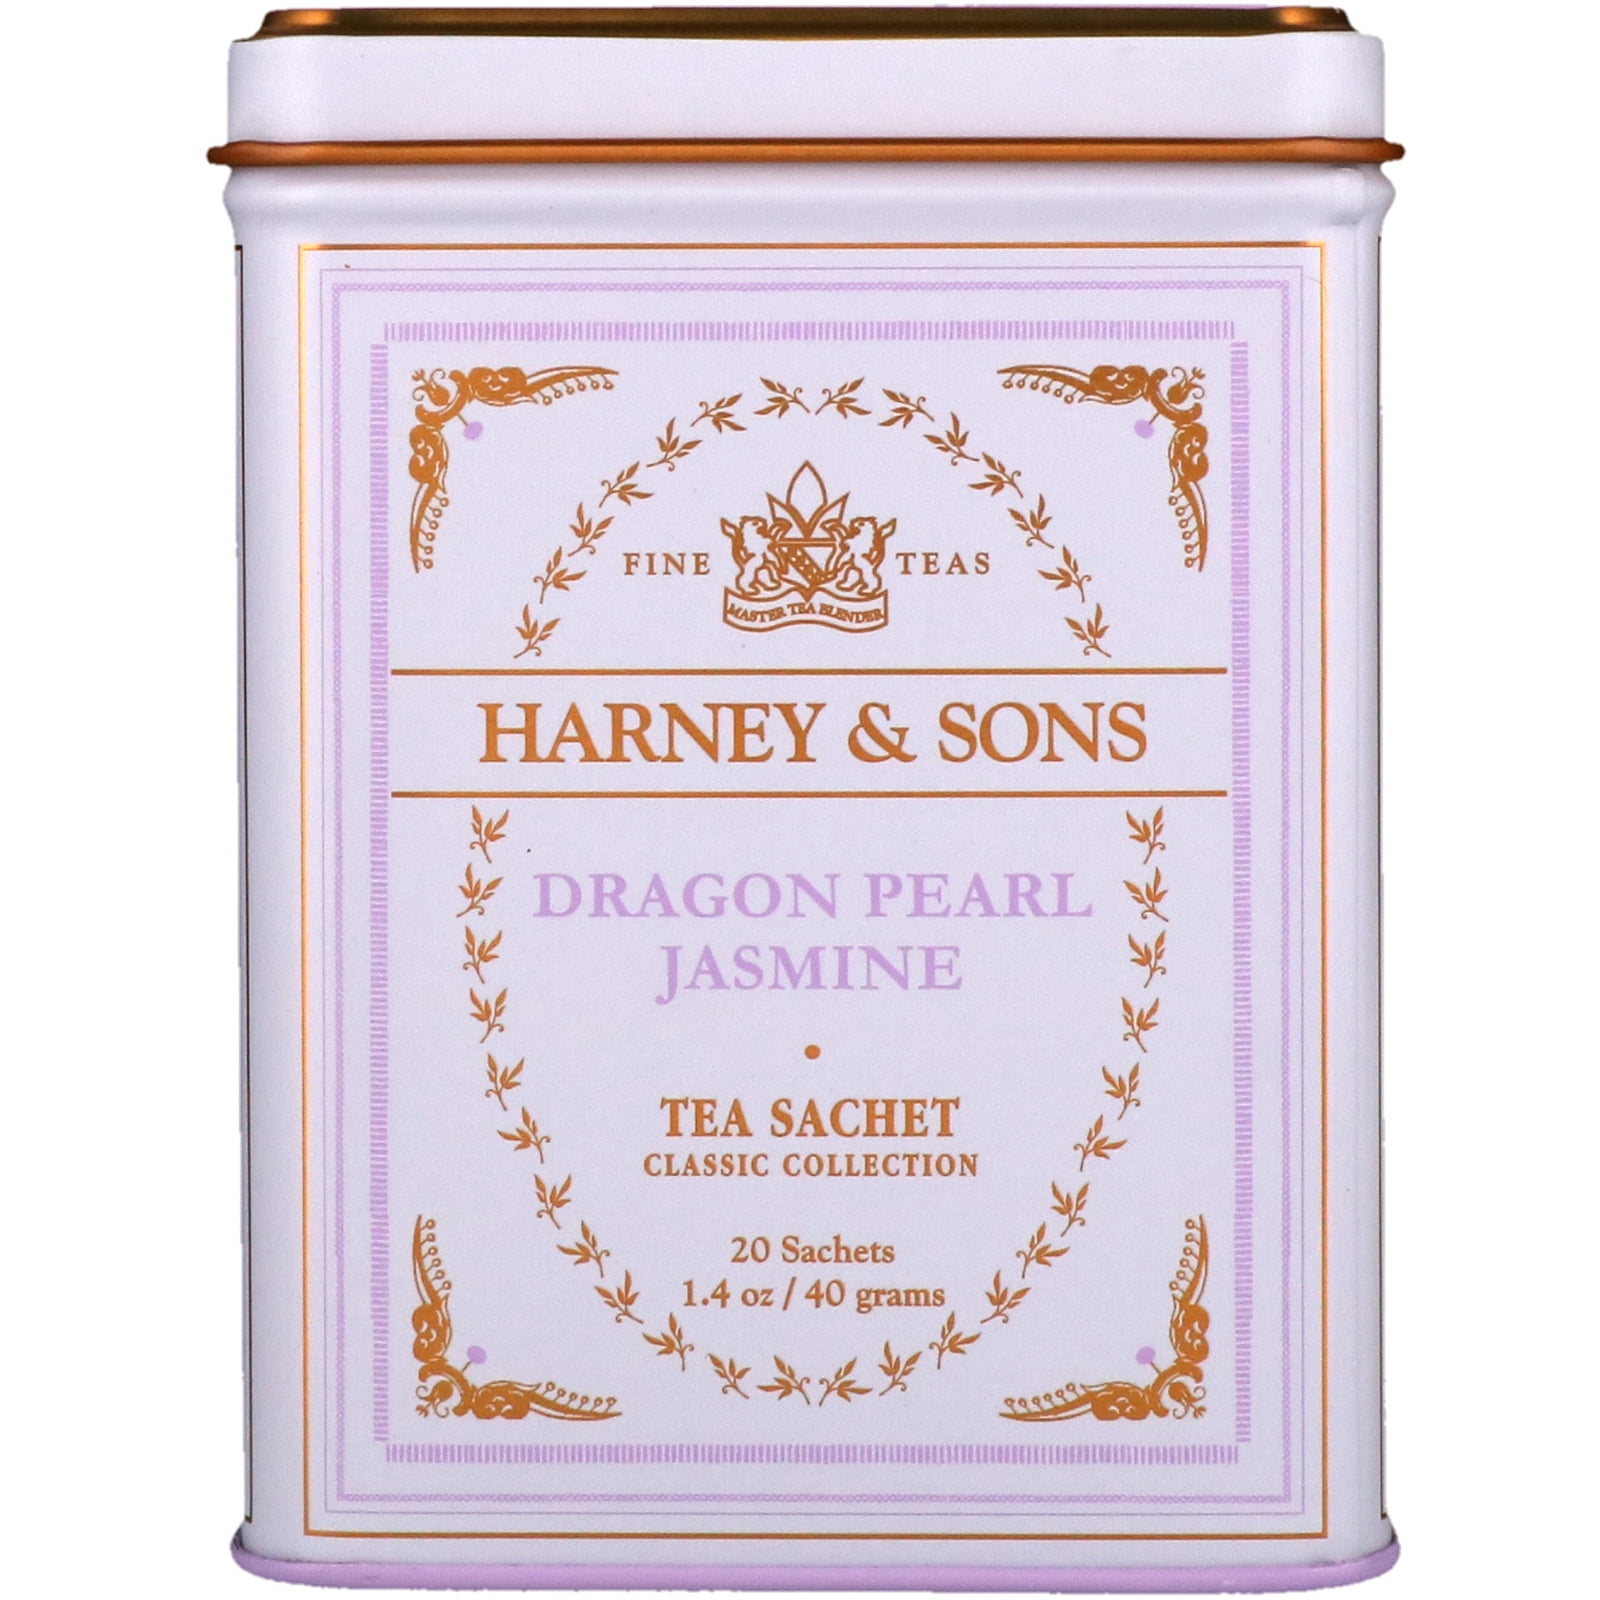 Harney & Sons Dragon Pearl Jasmine Tea Sachet, 20 Ct 